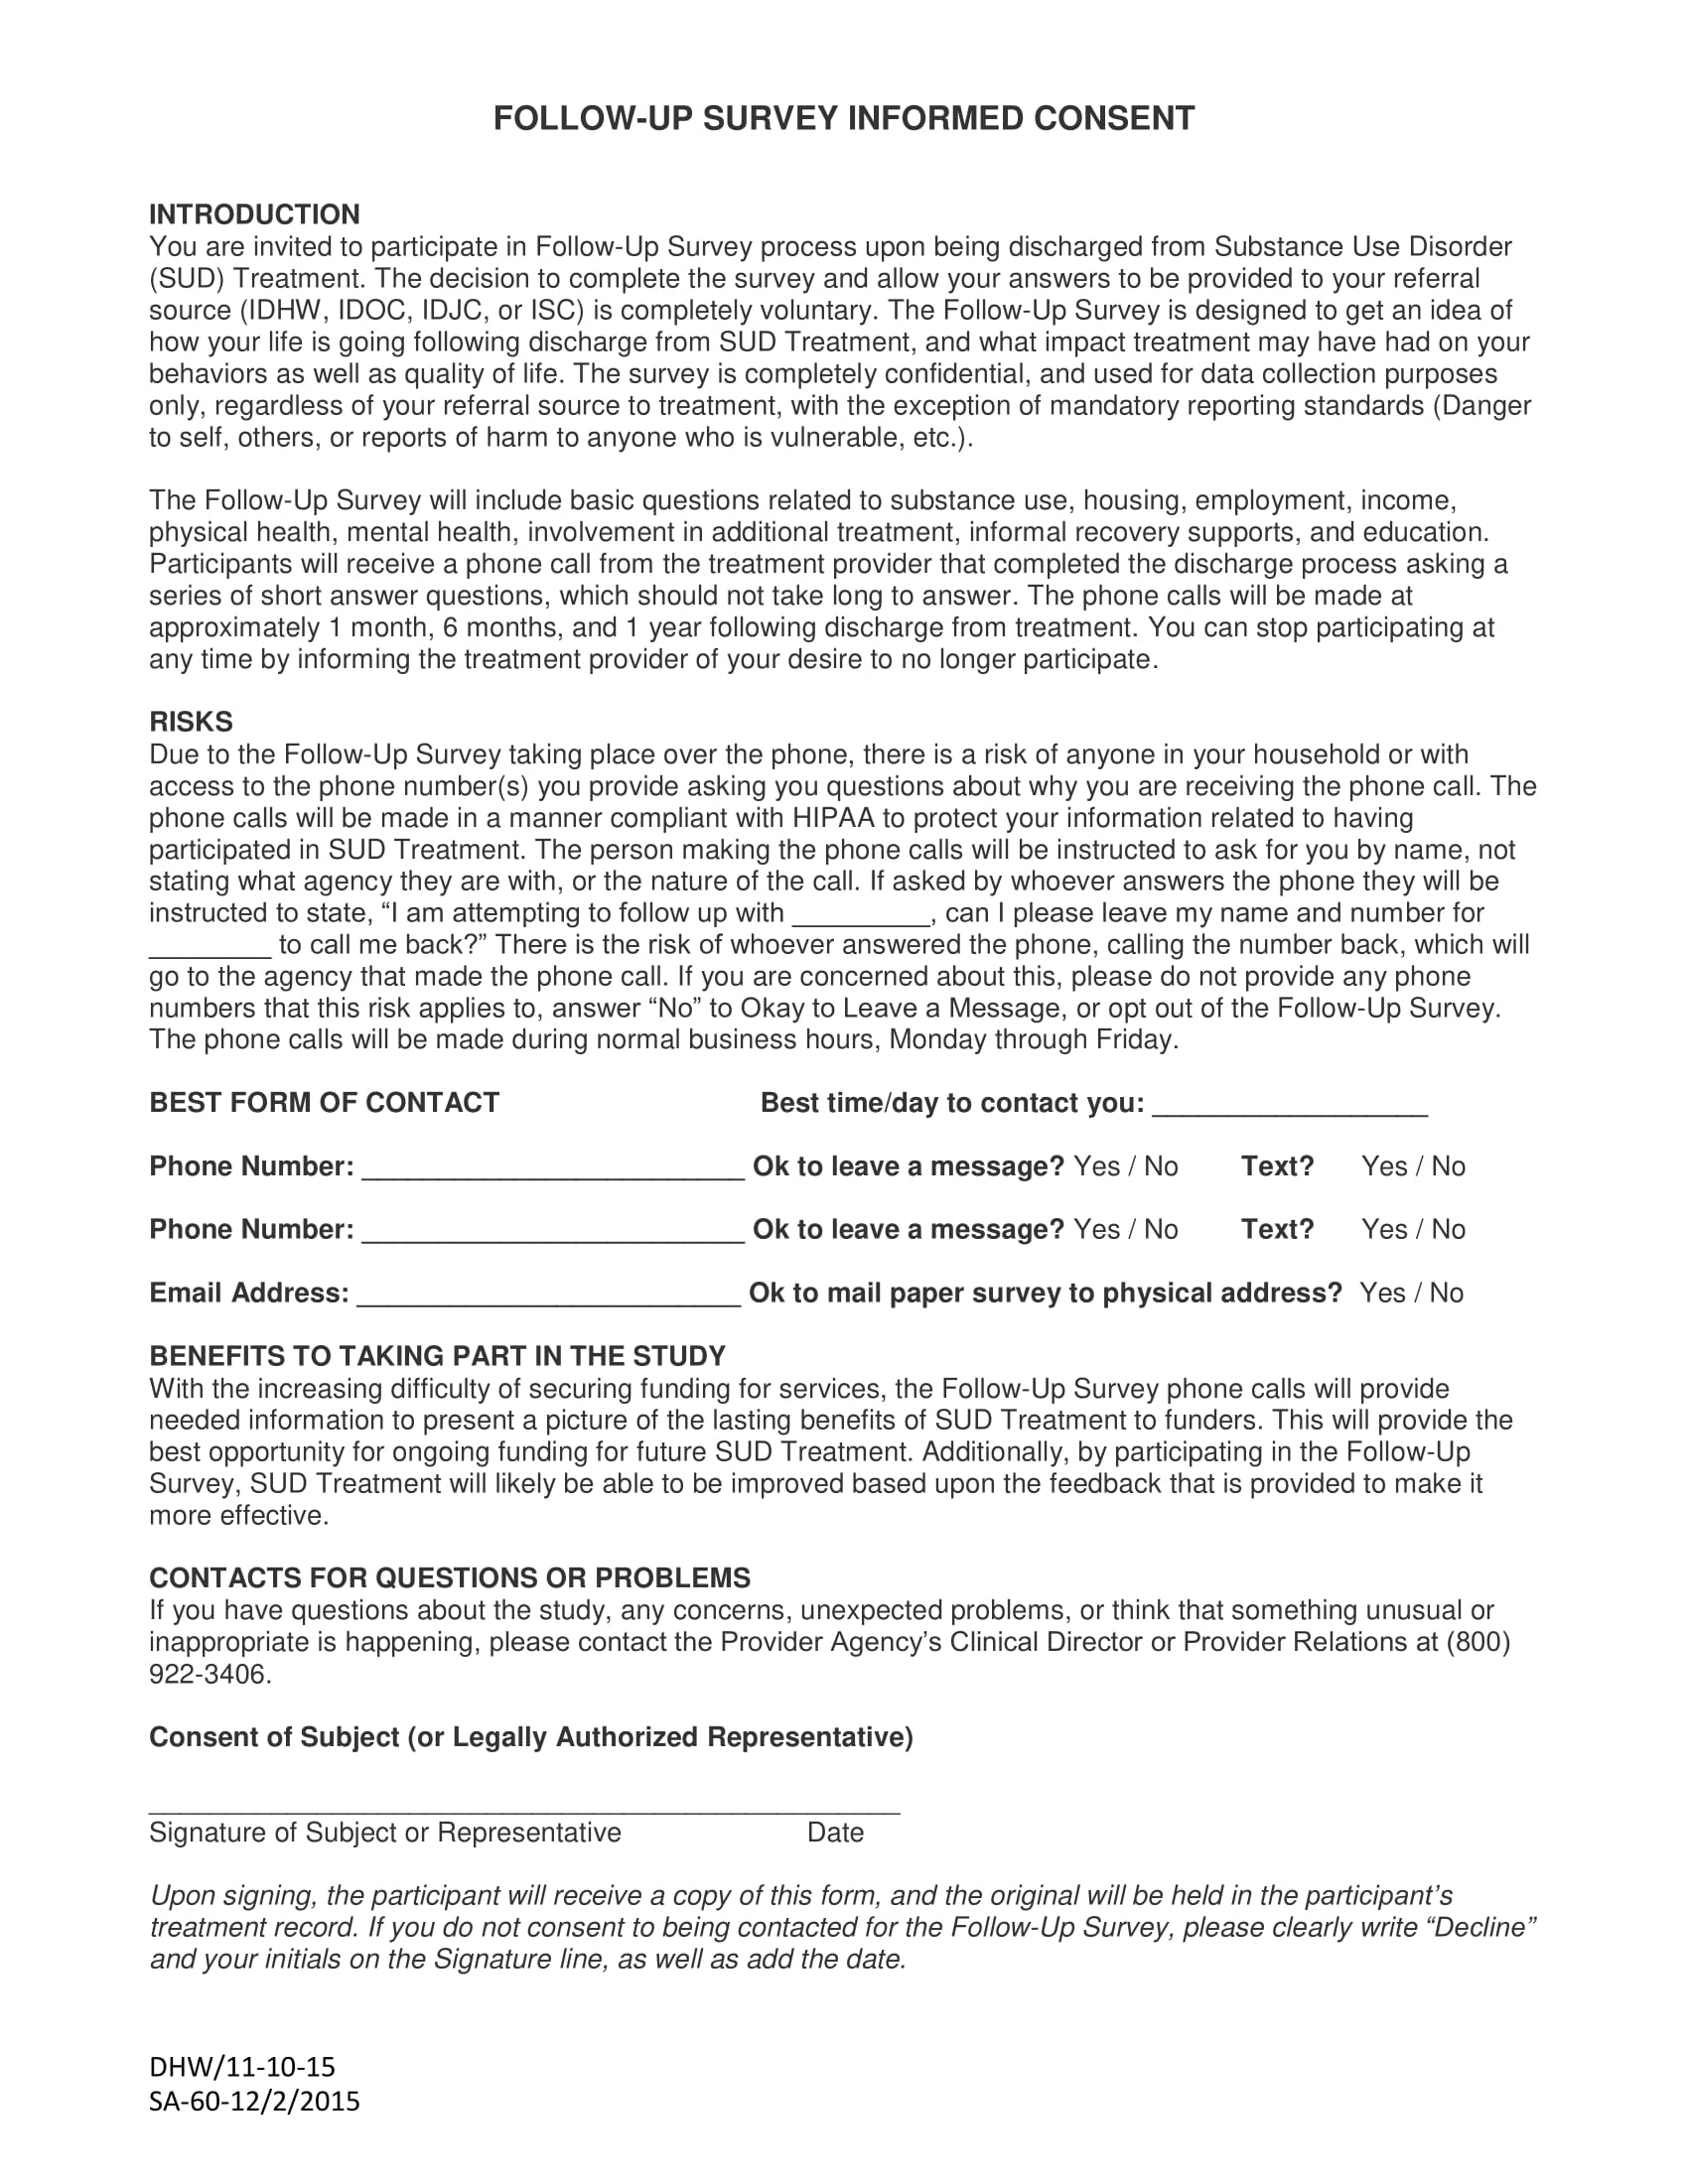 follow up survey informed consent form 1